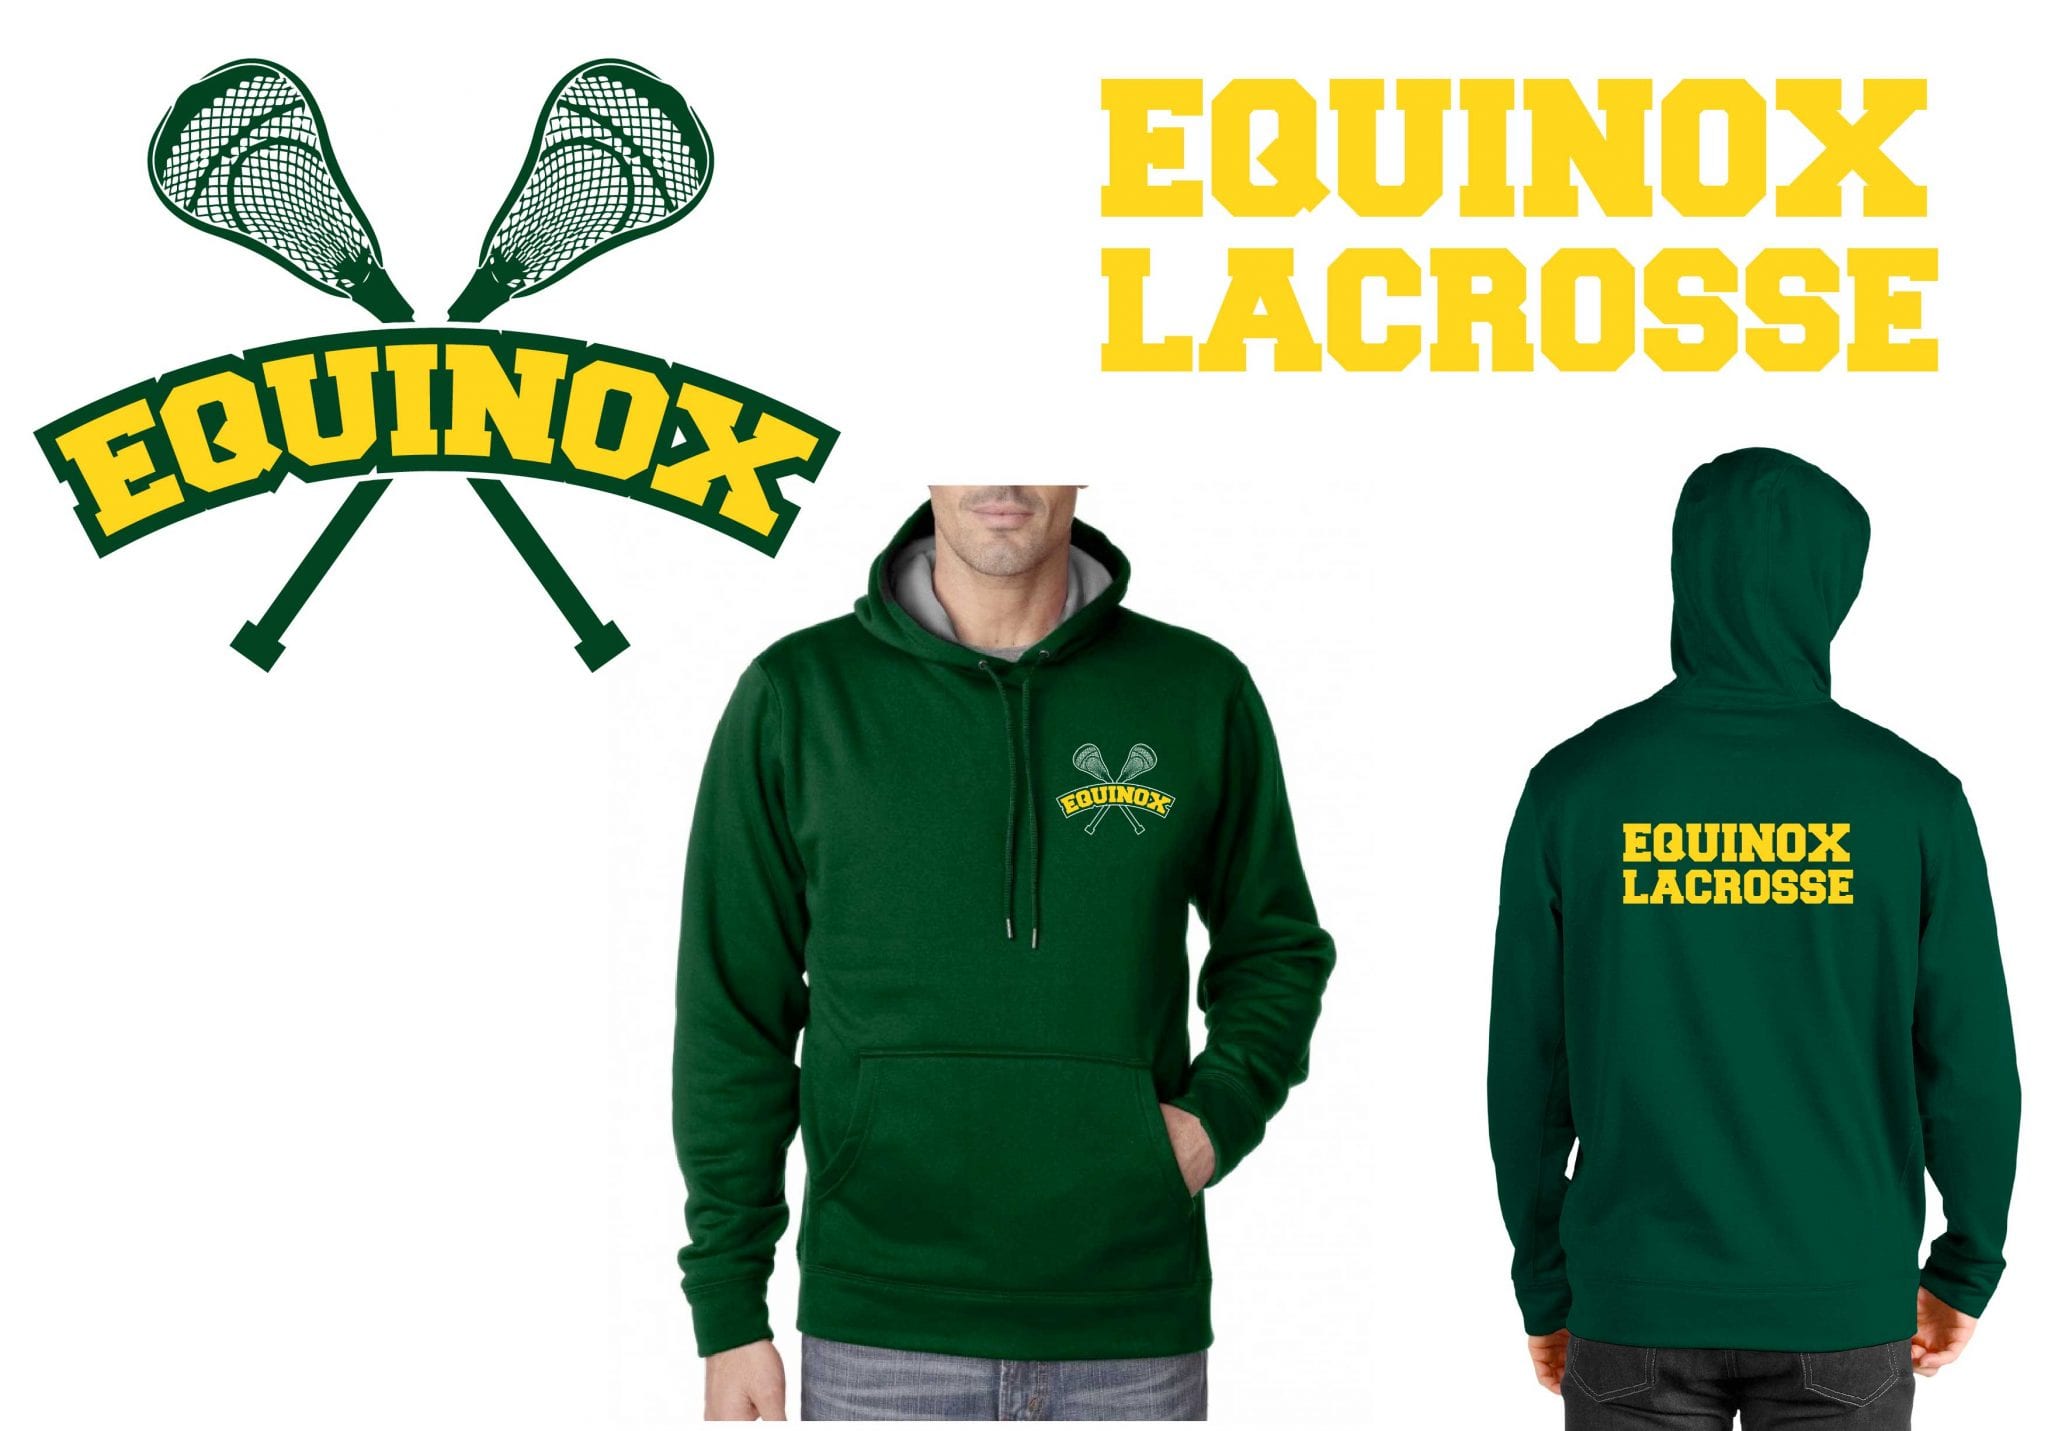 2017 Equinox Lacrosse vector logo design for t-shirt UrArtStudio